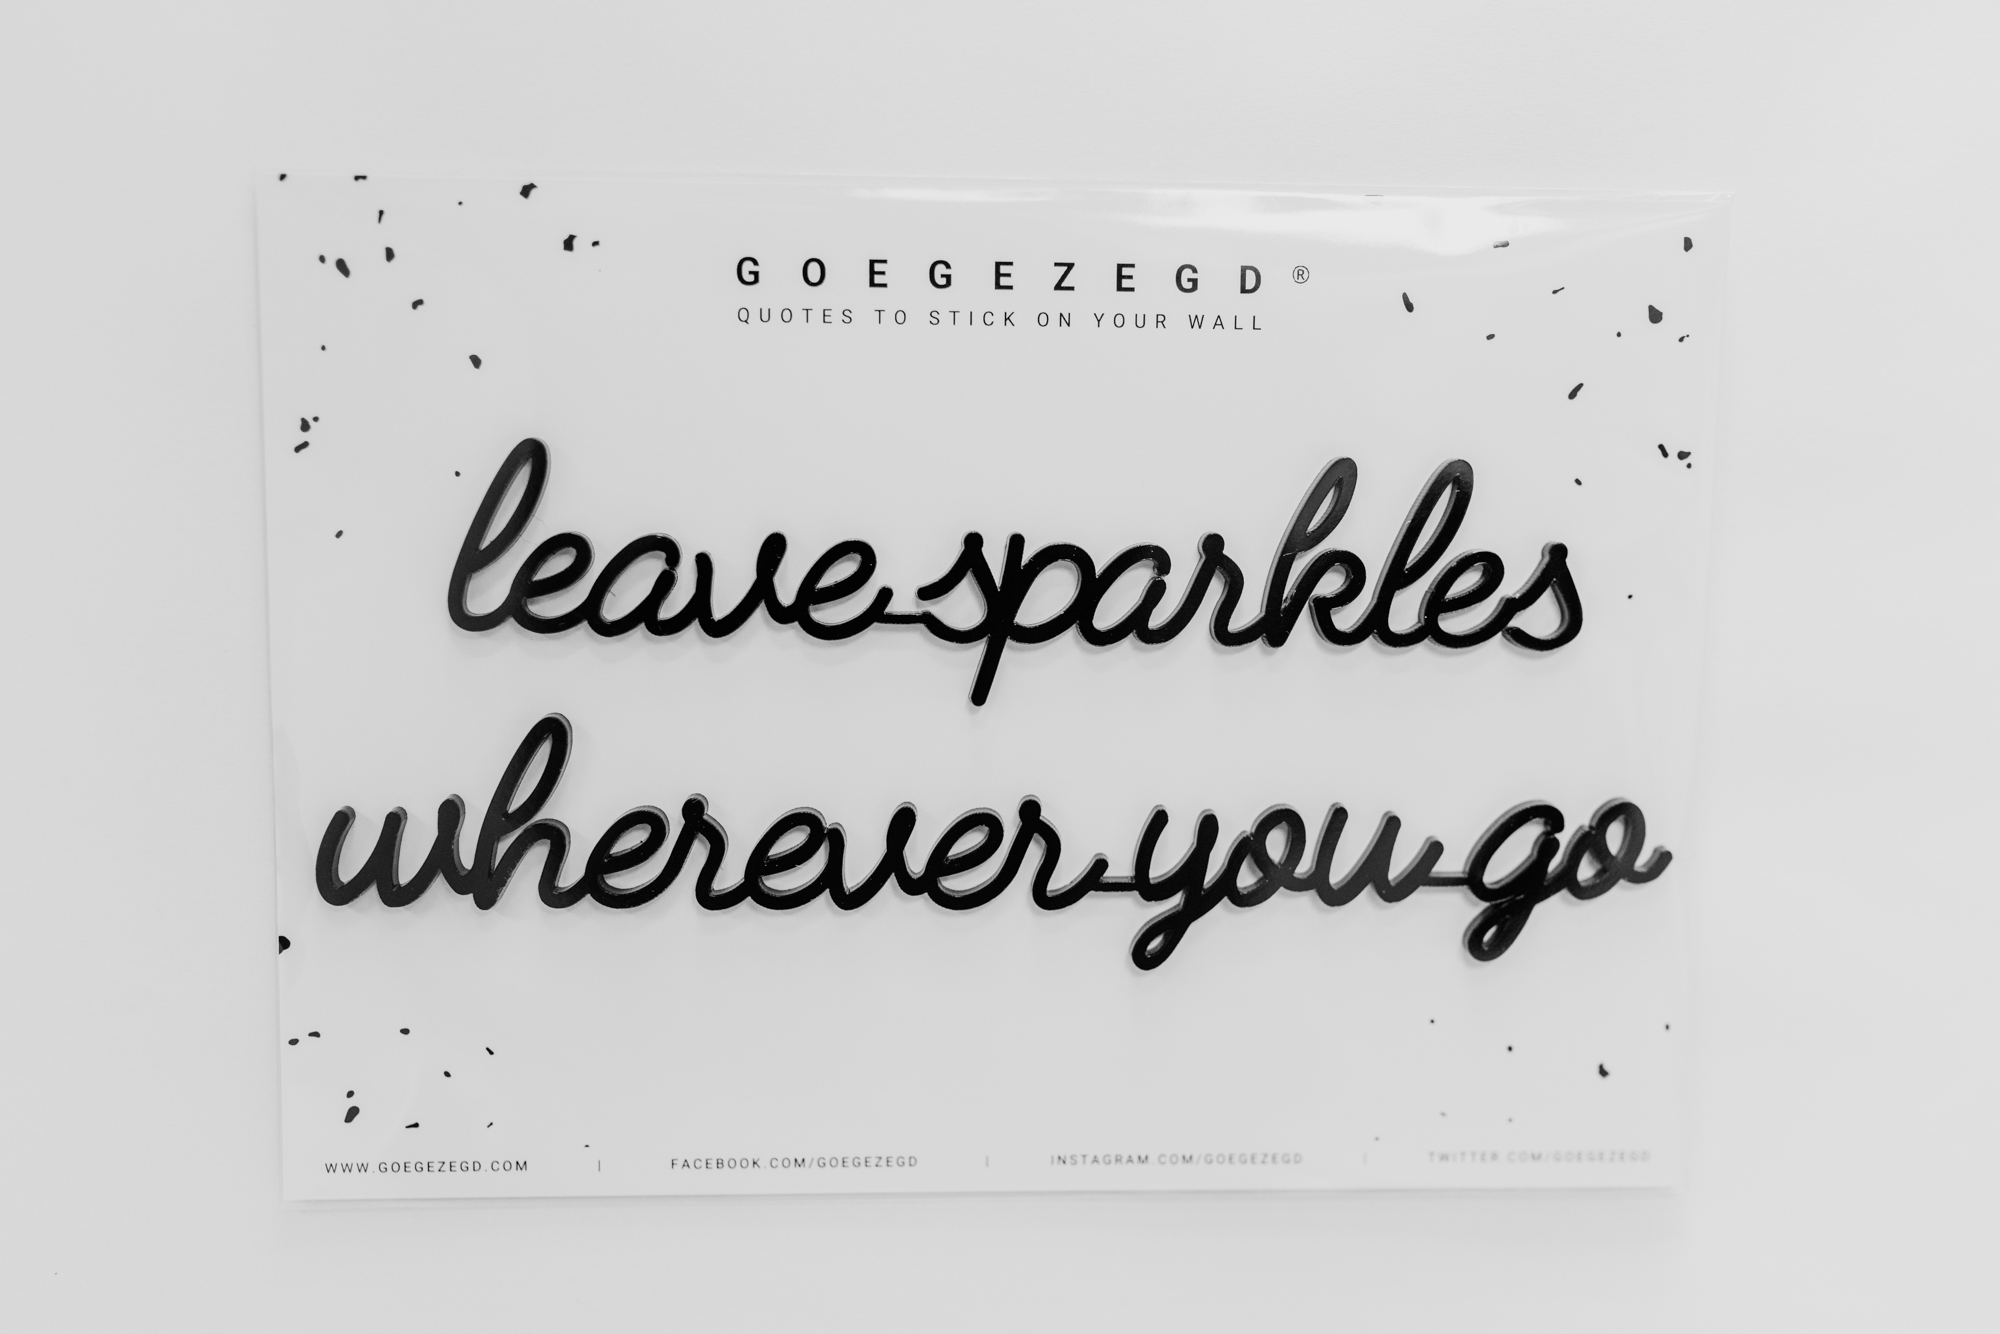 Citation – leave sparkles wherever you go